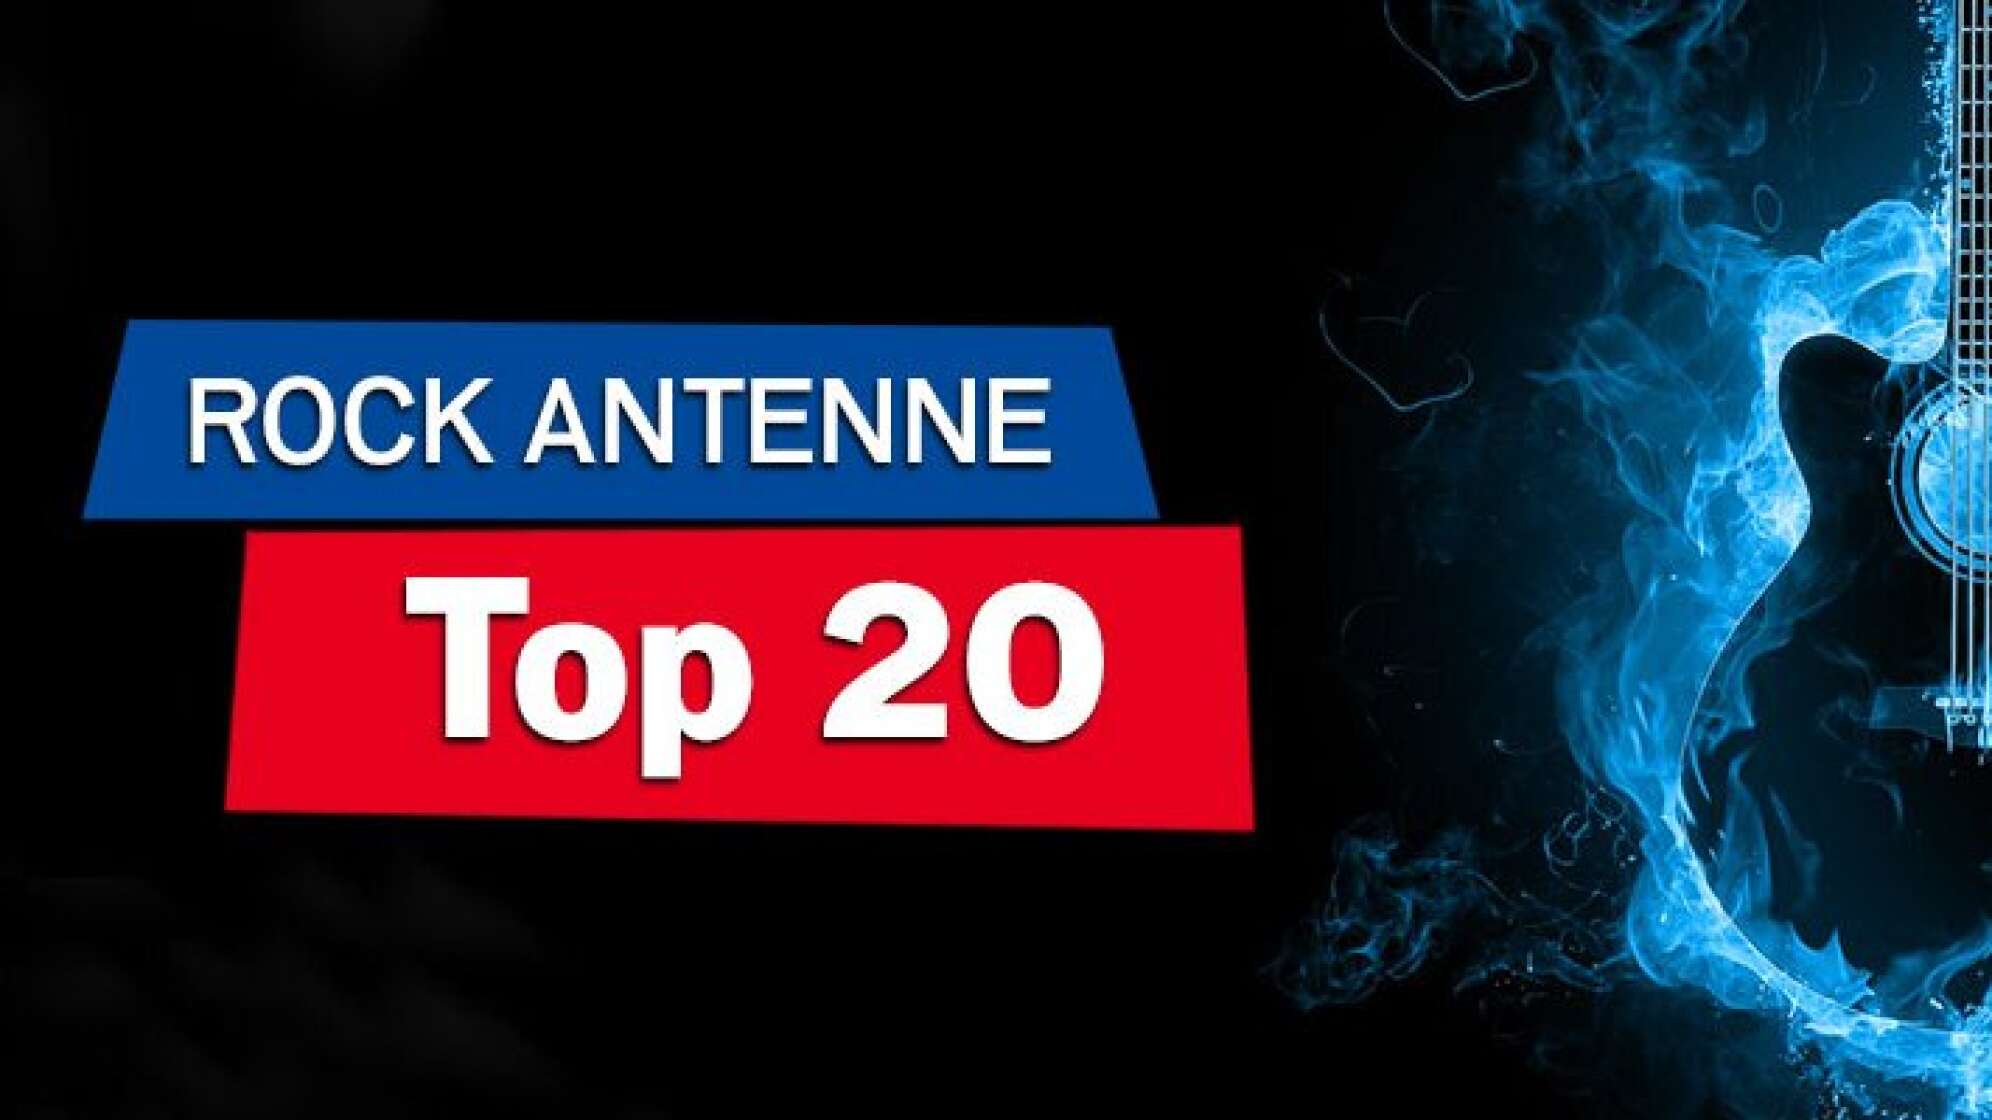 ROCK ANTENNE Top 20